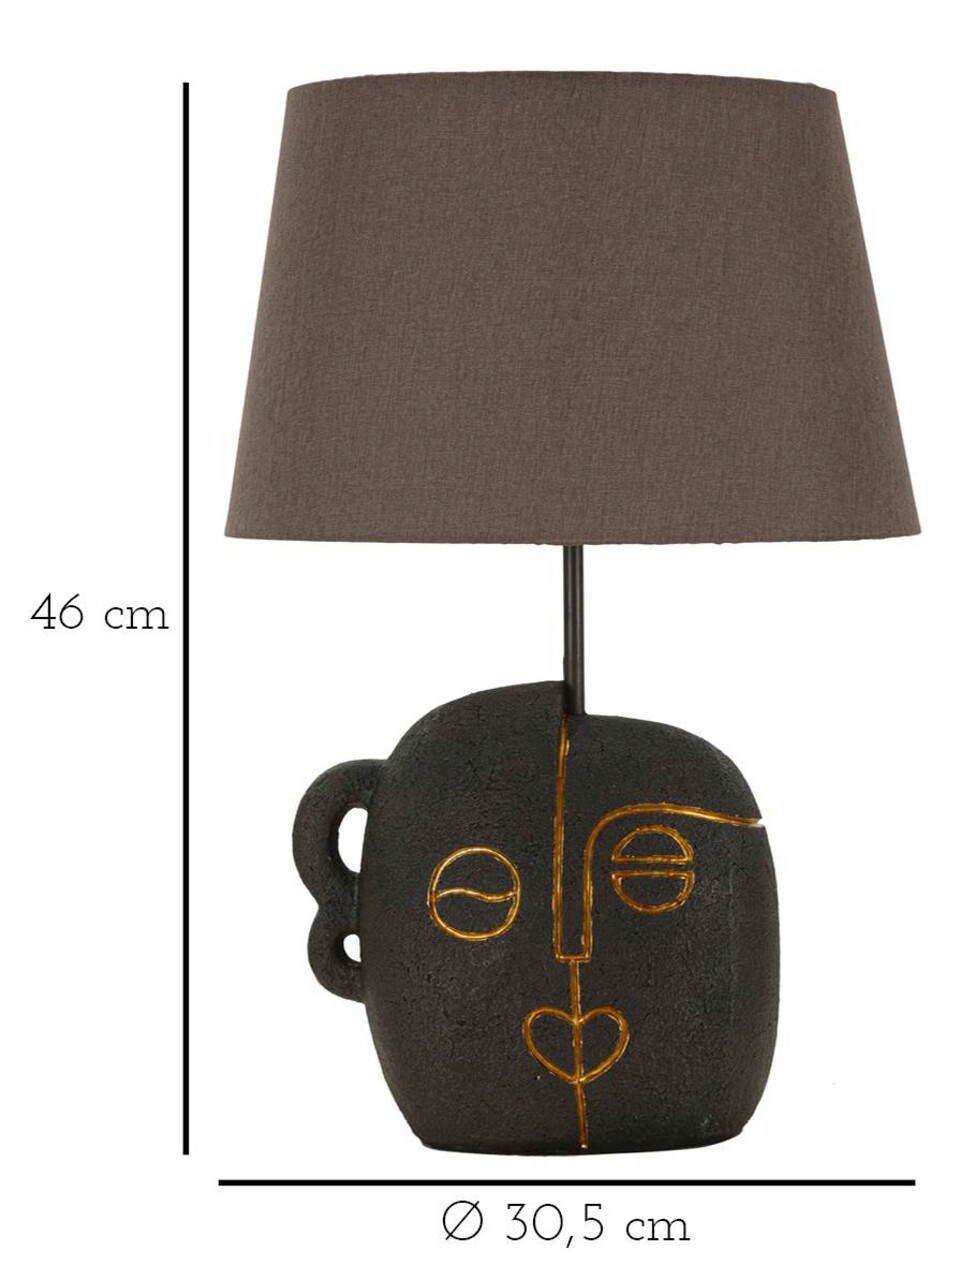 Lampa de masa Tribal -A, Mauro Ferretti, 1x E27, 40W, 30.5x46 cm, polirasina/fier/textil, maro/auriu